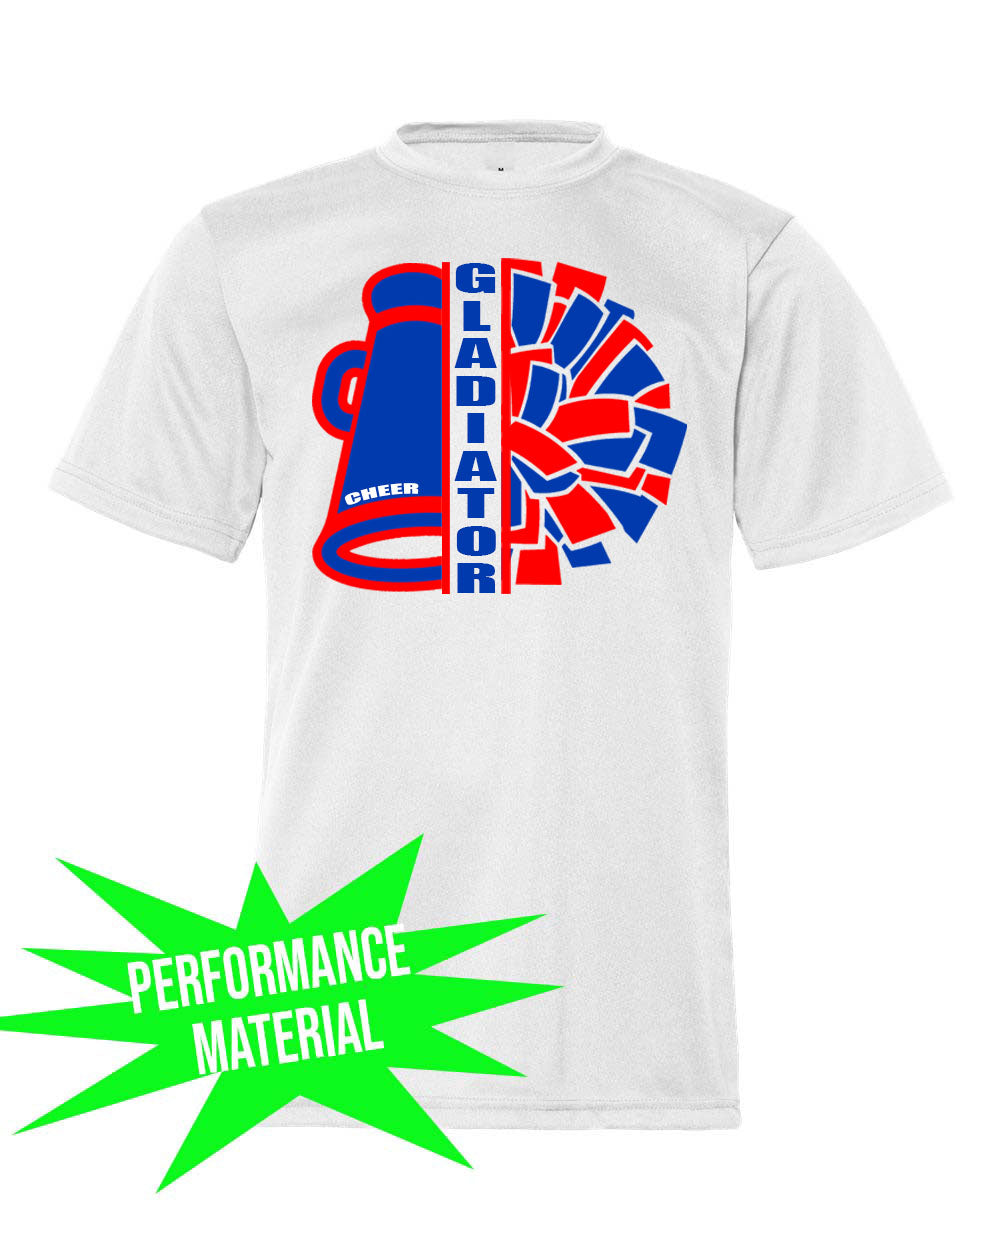 Goshen Cheer Performance Material design 10 T-Shirt